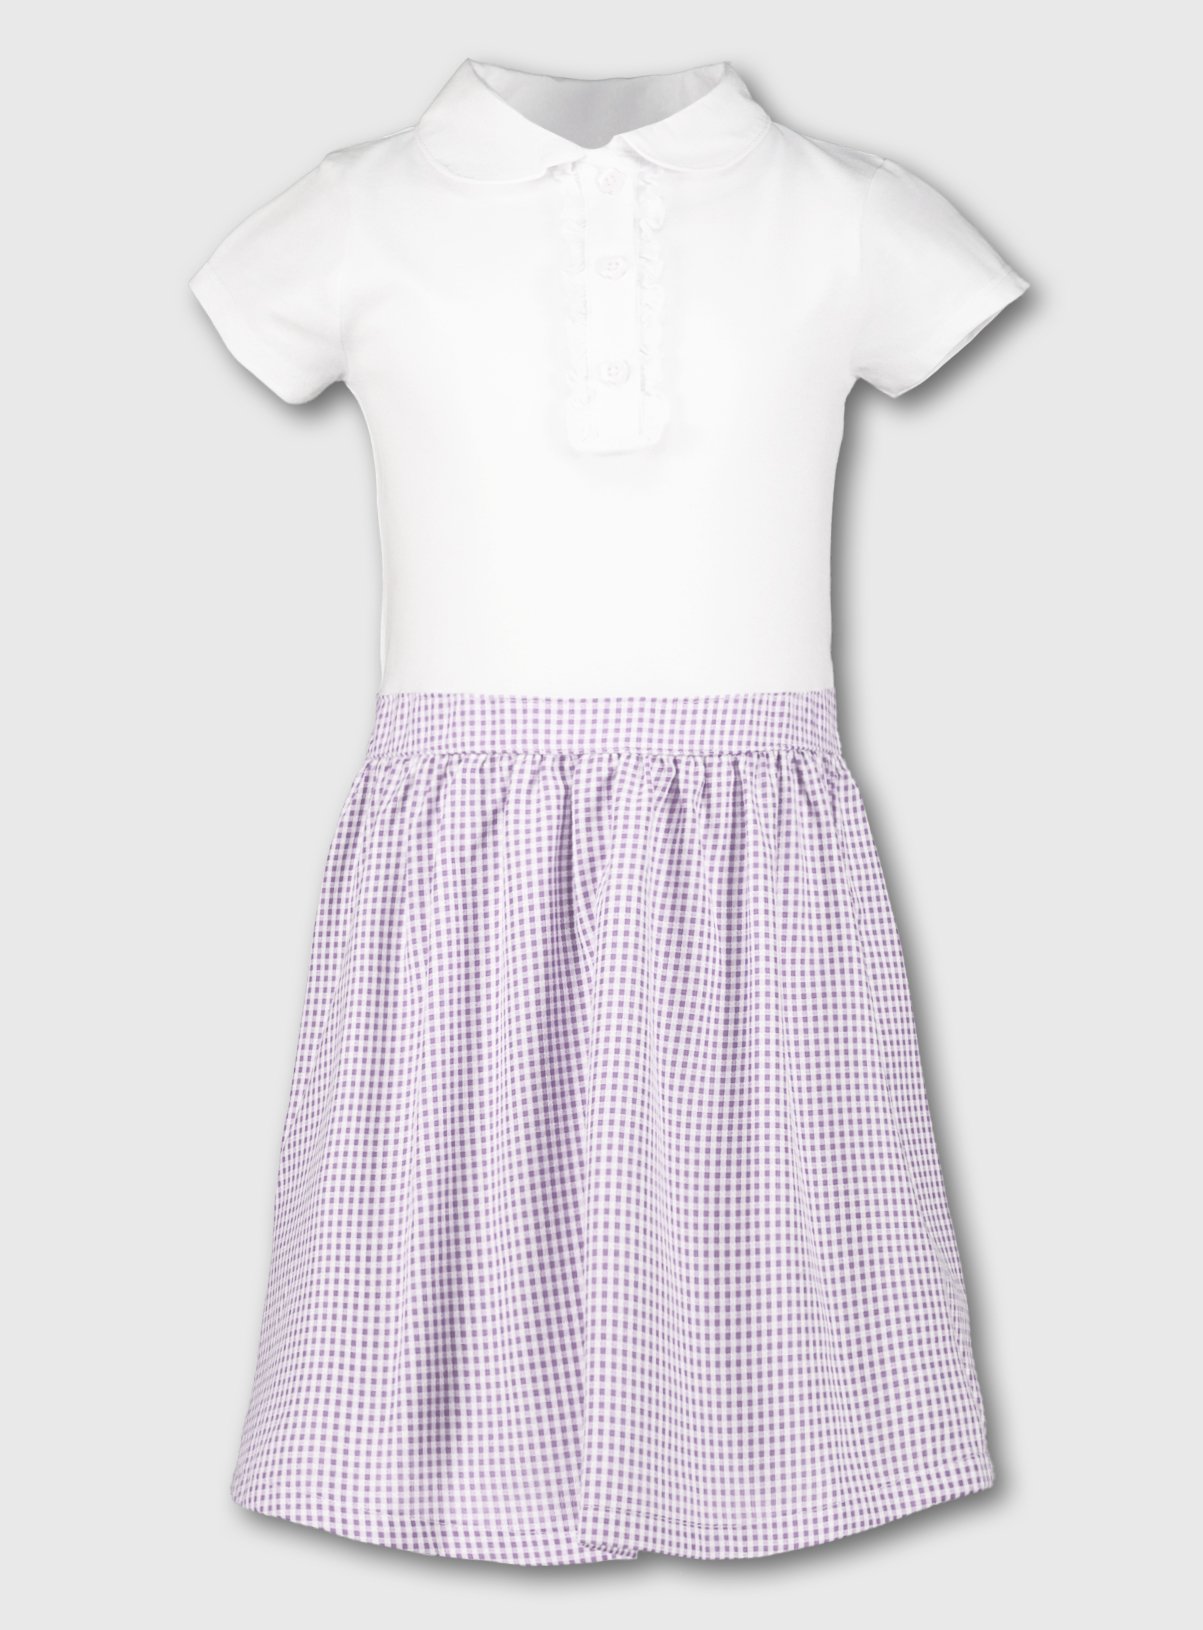 purple and white gingham school dress